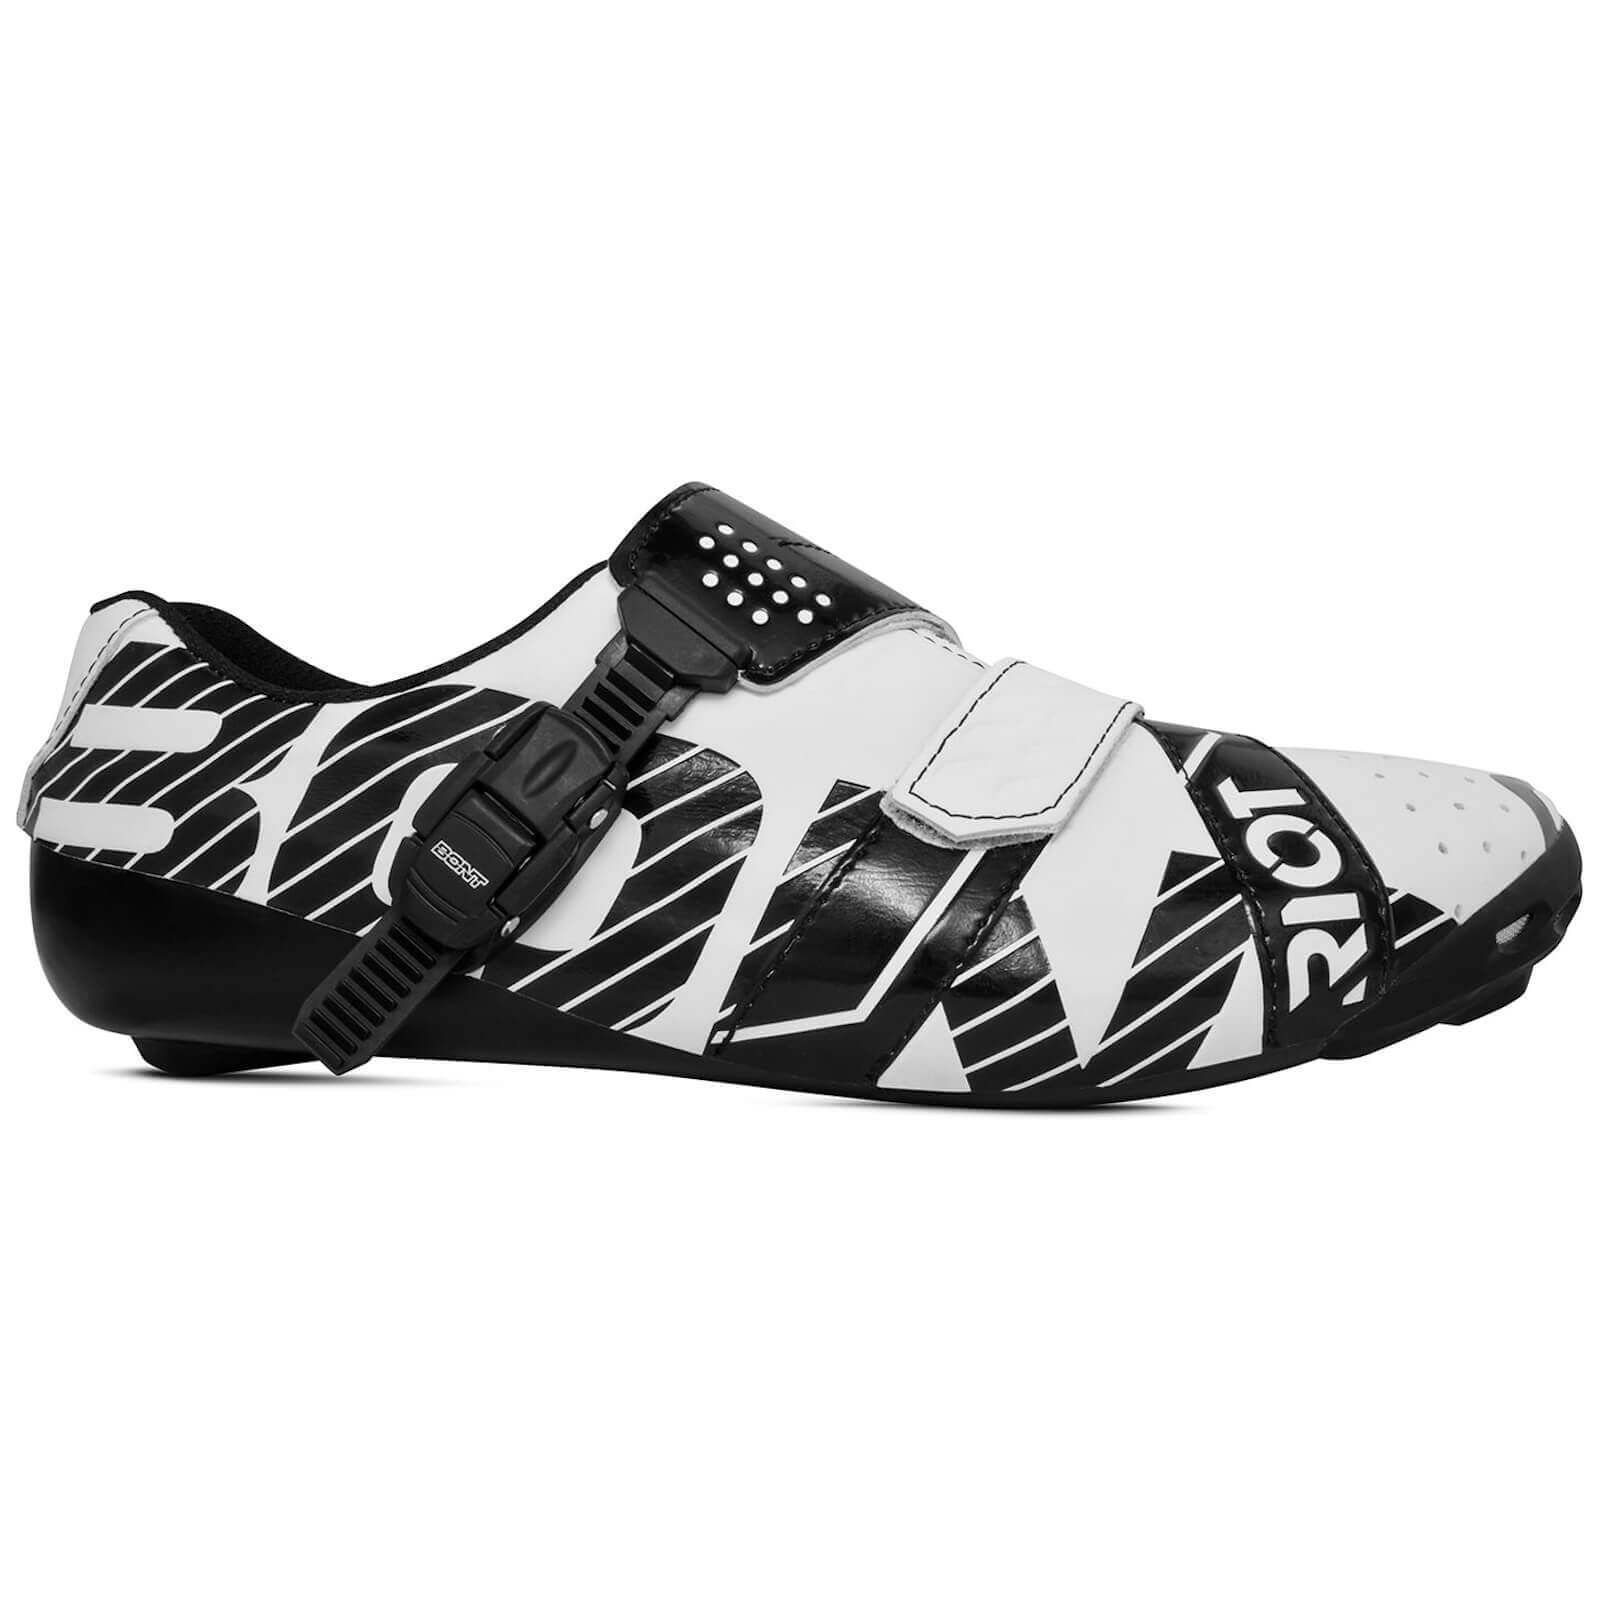 Bont Riot Road Shoes - EU 45 - White/Black